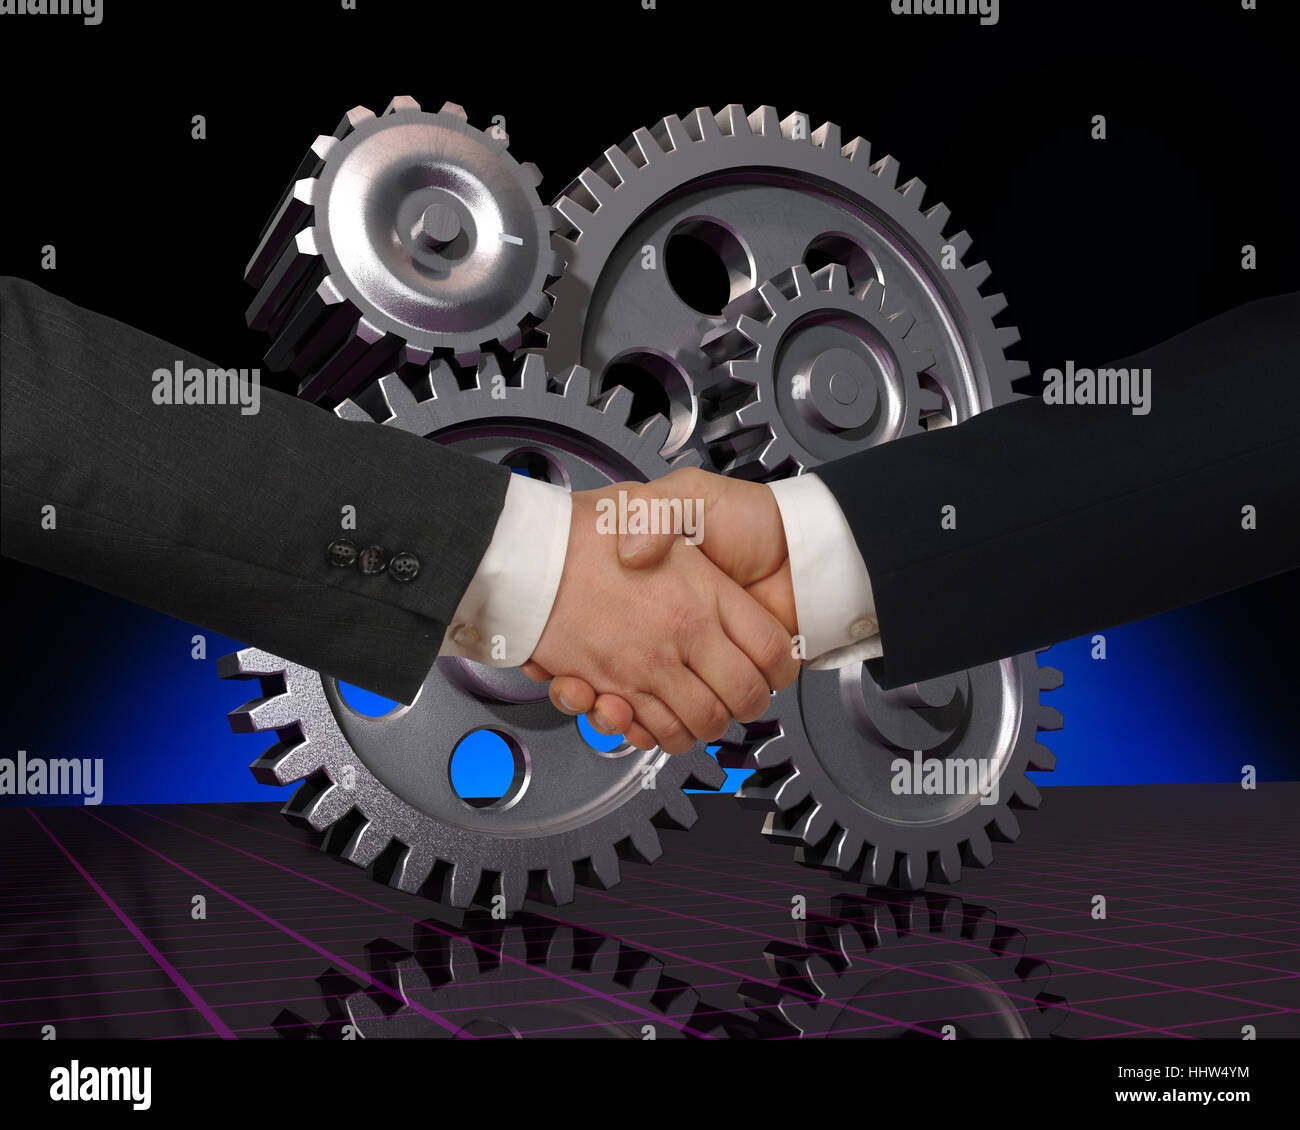 hand, hands, handshake, business dealings, deal, business transaction, Stock Photo